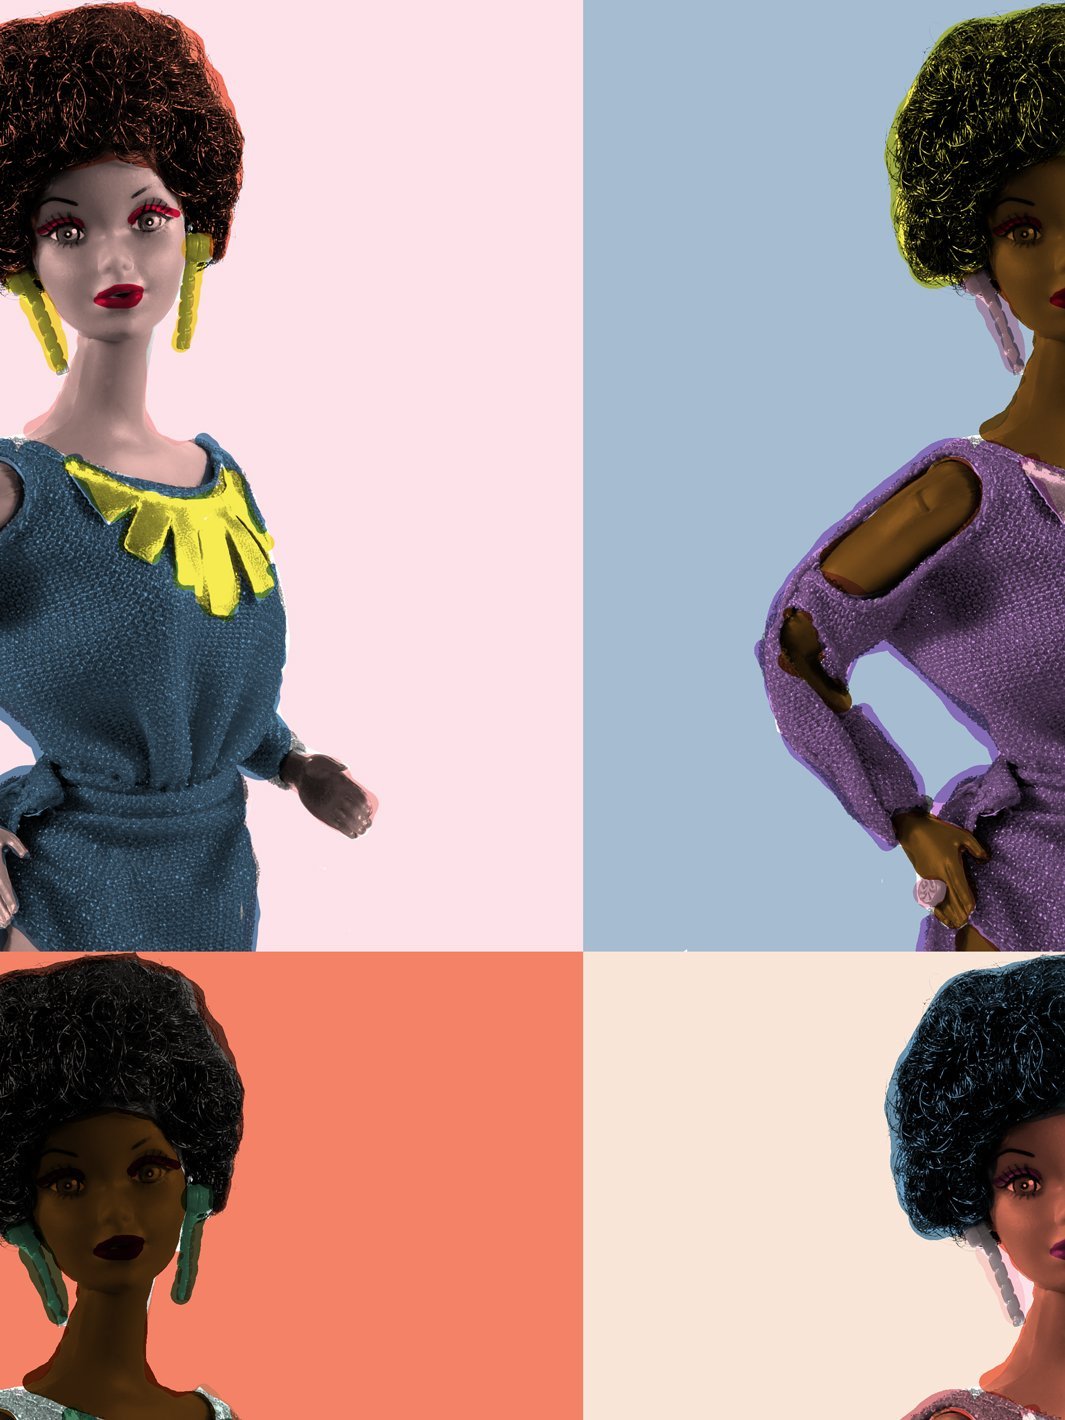 HD wallpaper Barbie doll wearing gray top black africanamerican face  portrait  Wallpaper Flare